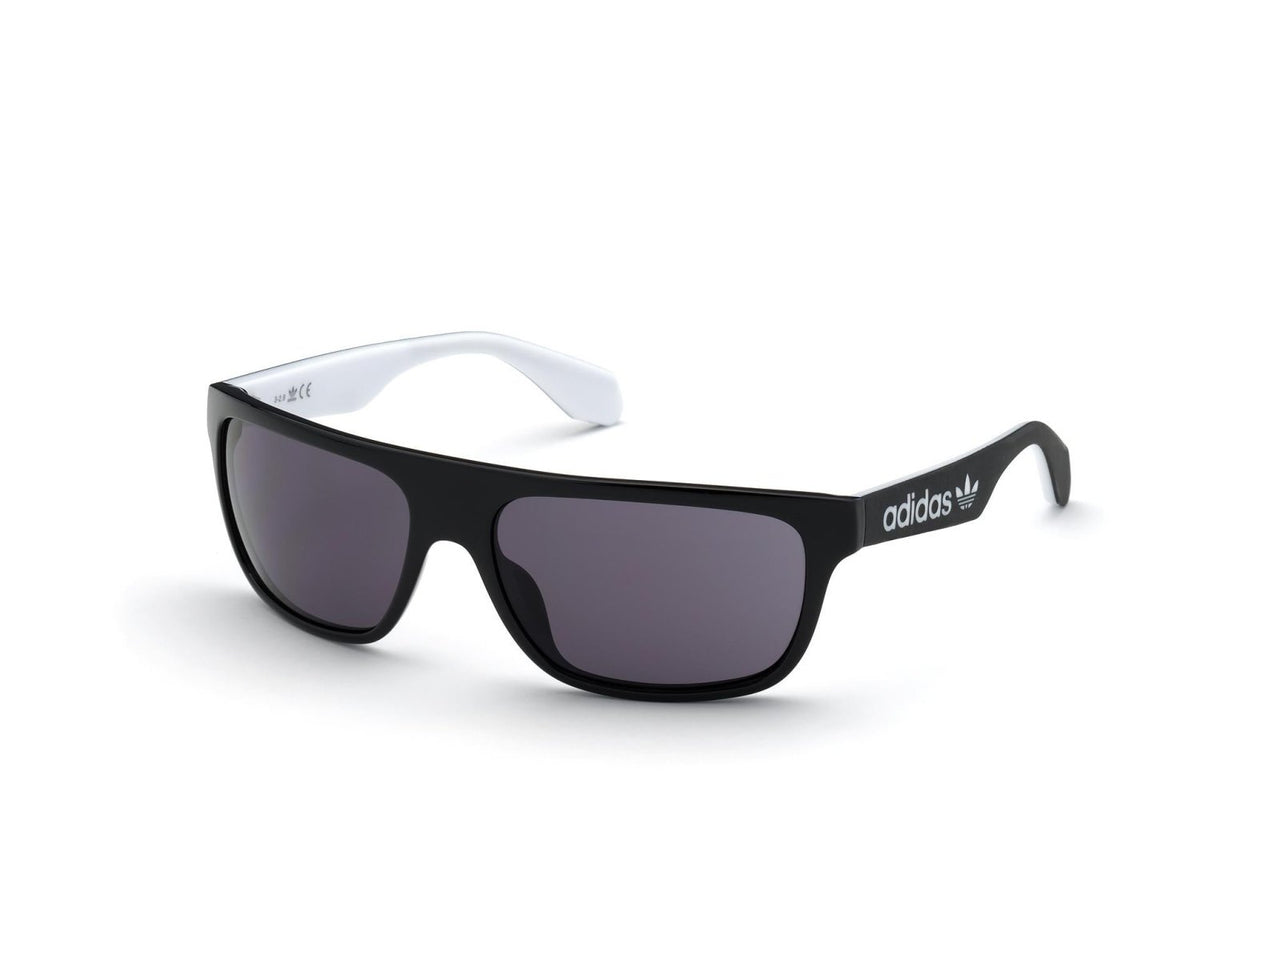 ADIDAS ORIGINALS 0023 Sunglasses